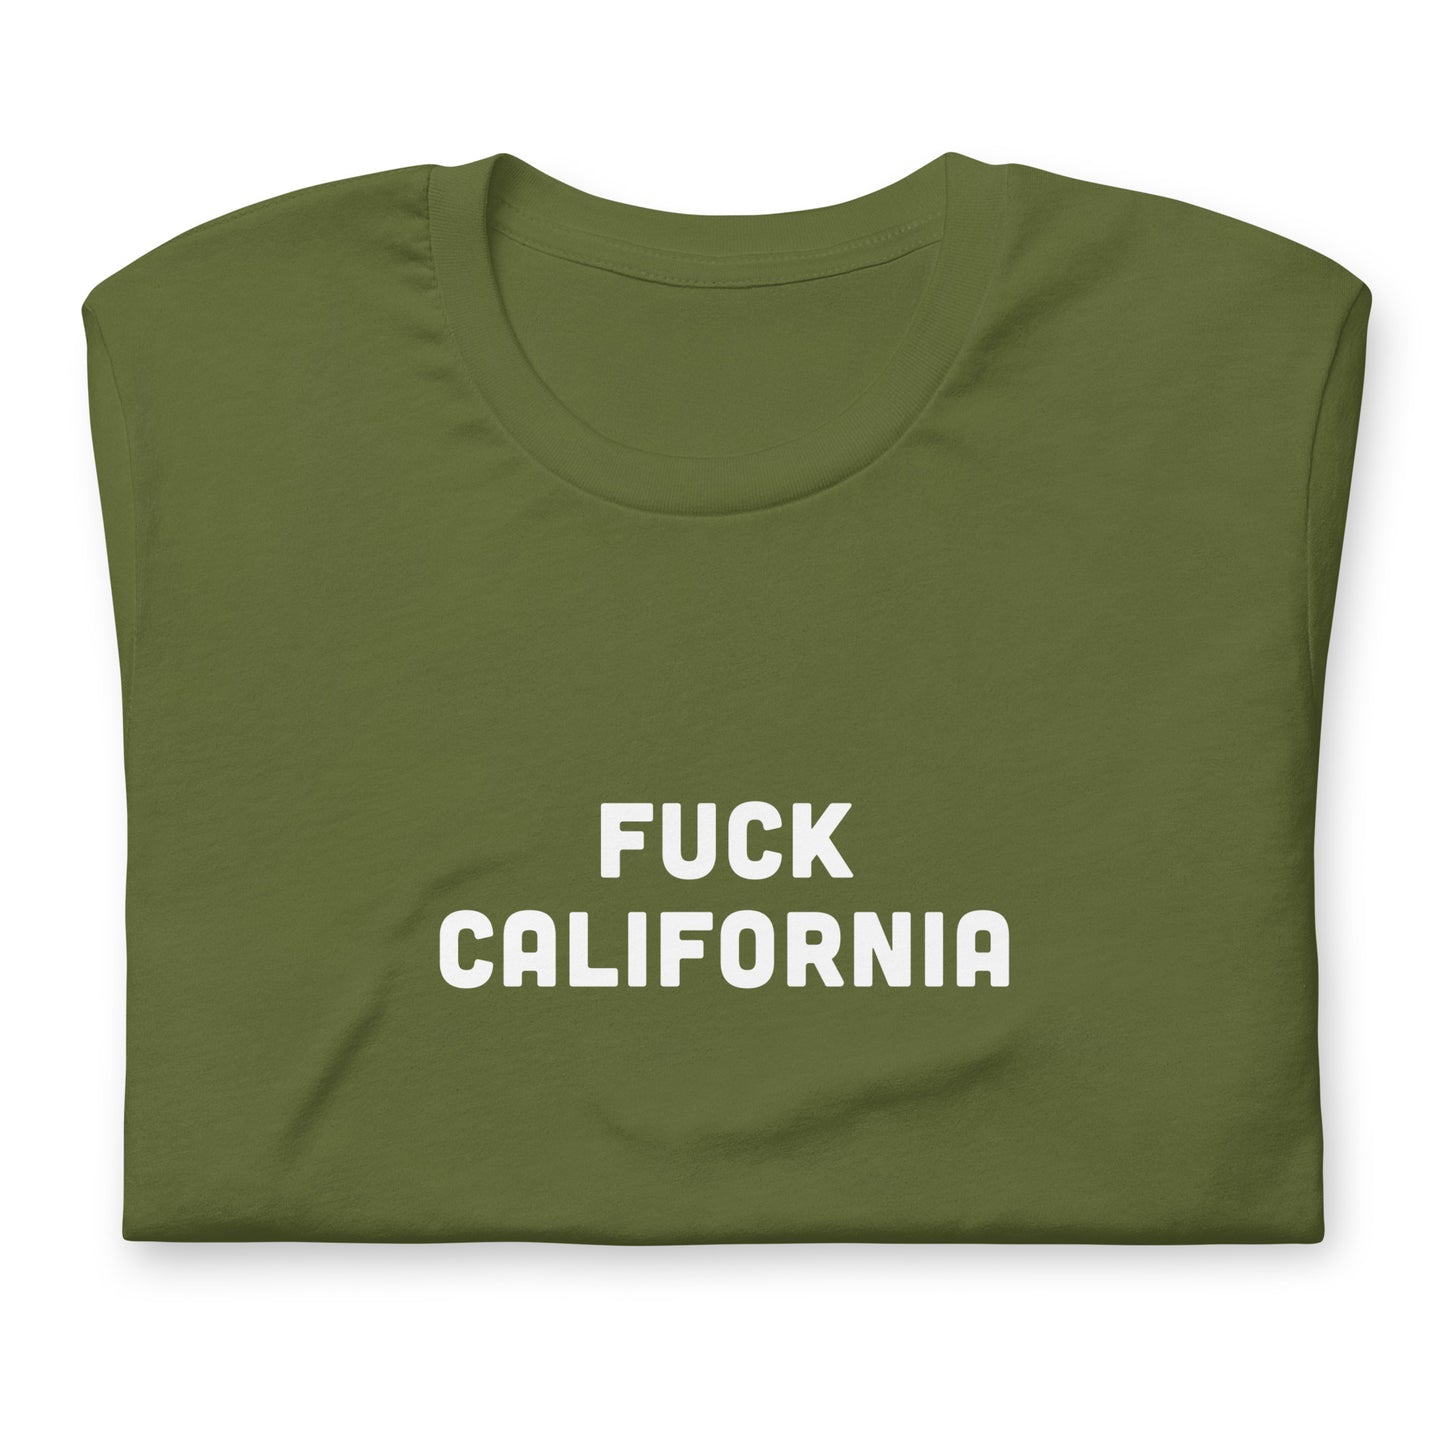 Fuck California T-Shirt Size S Color Navy